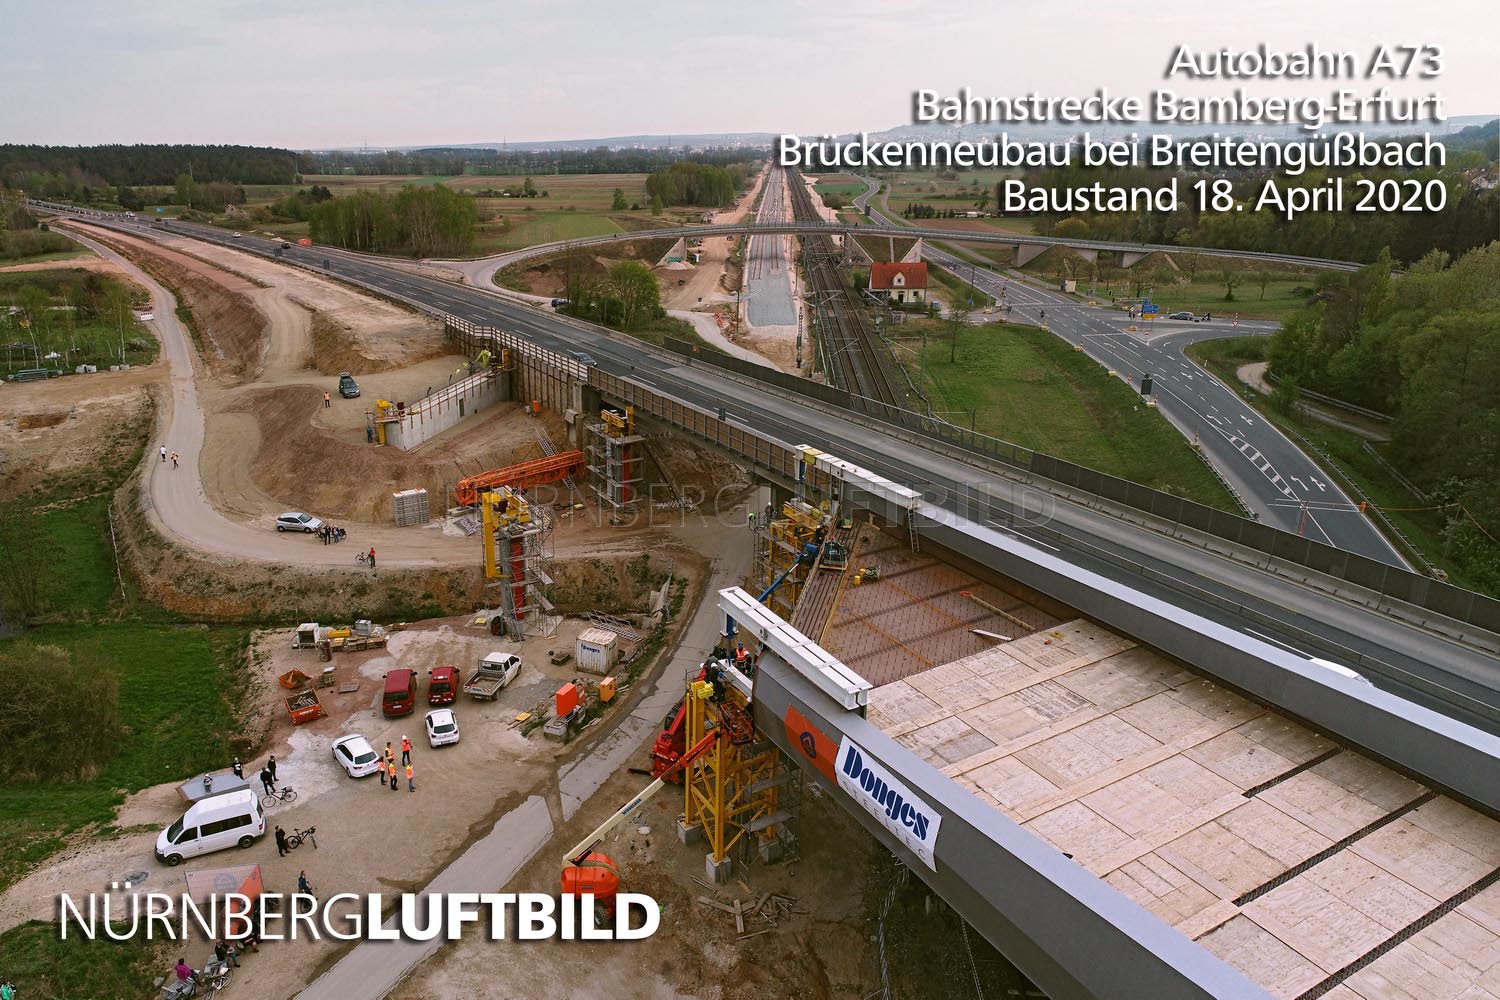 Autobahn A73, Bahnstrecke Bamberg-Erfurt, Brückenneubau bei Breitengüßbach, Baustand 18. April 2020